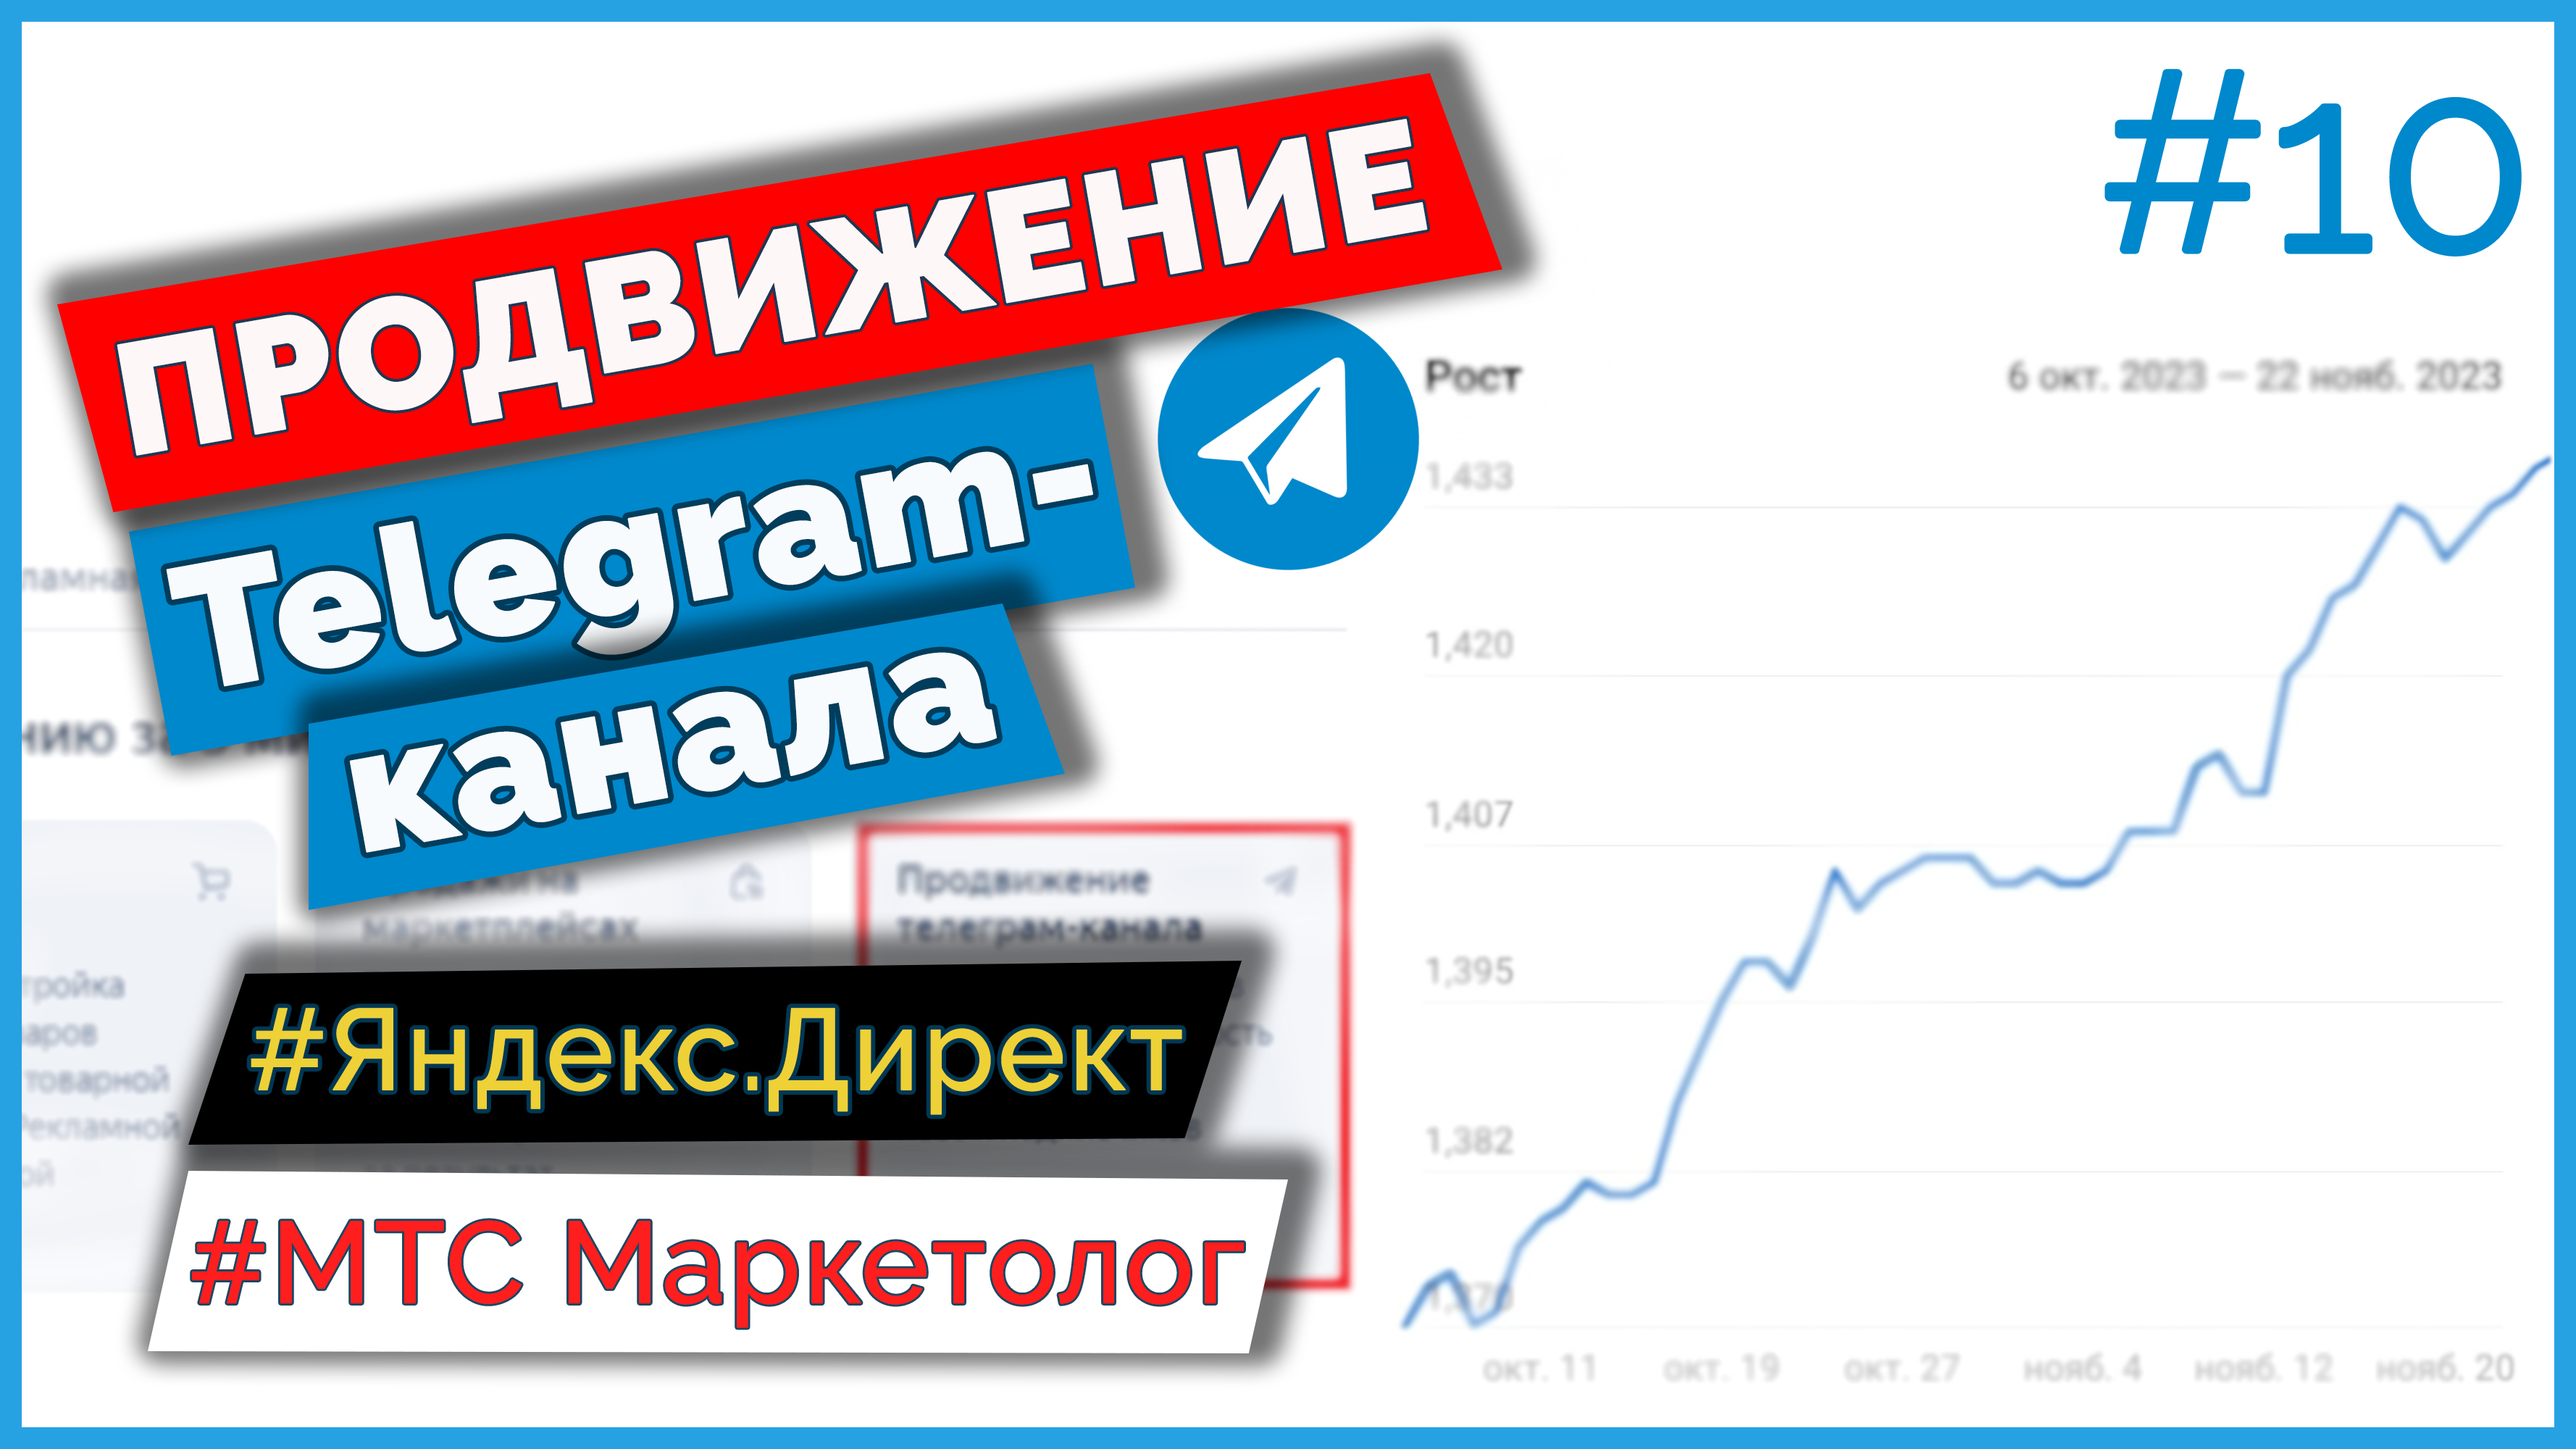 Реклама Telegram-канала через Яндекс.Директ и МТС Маркетолог